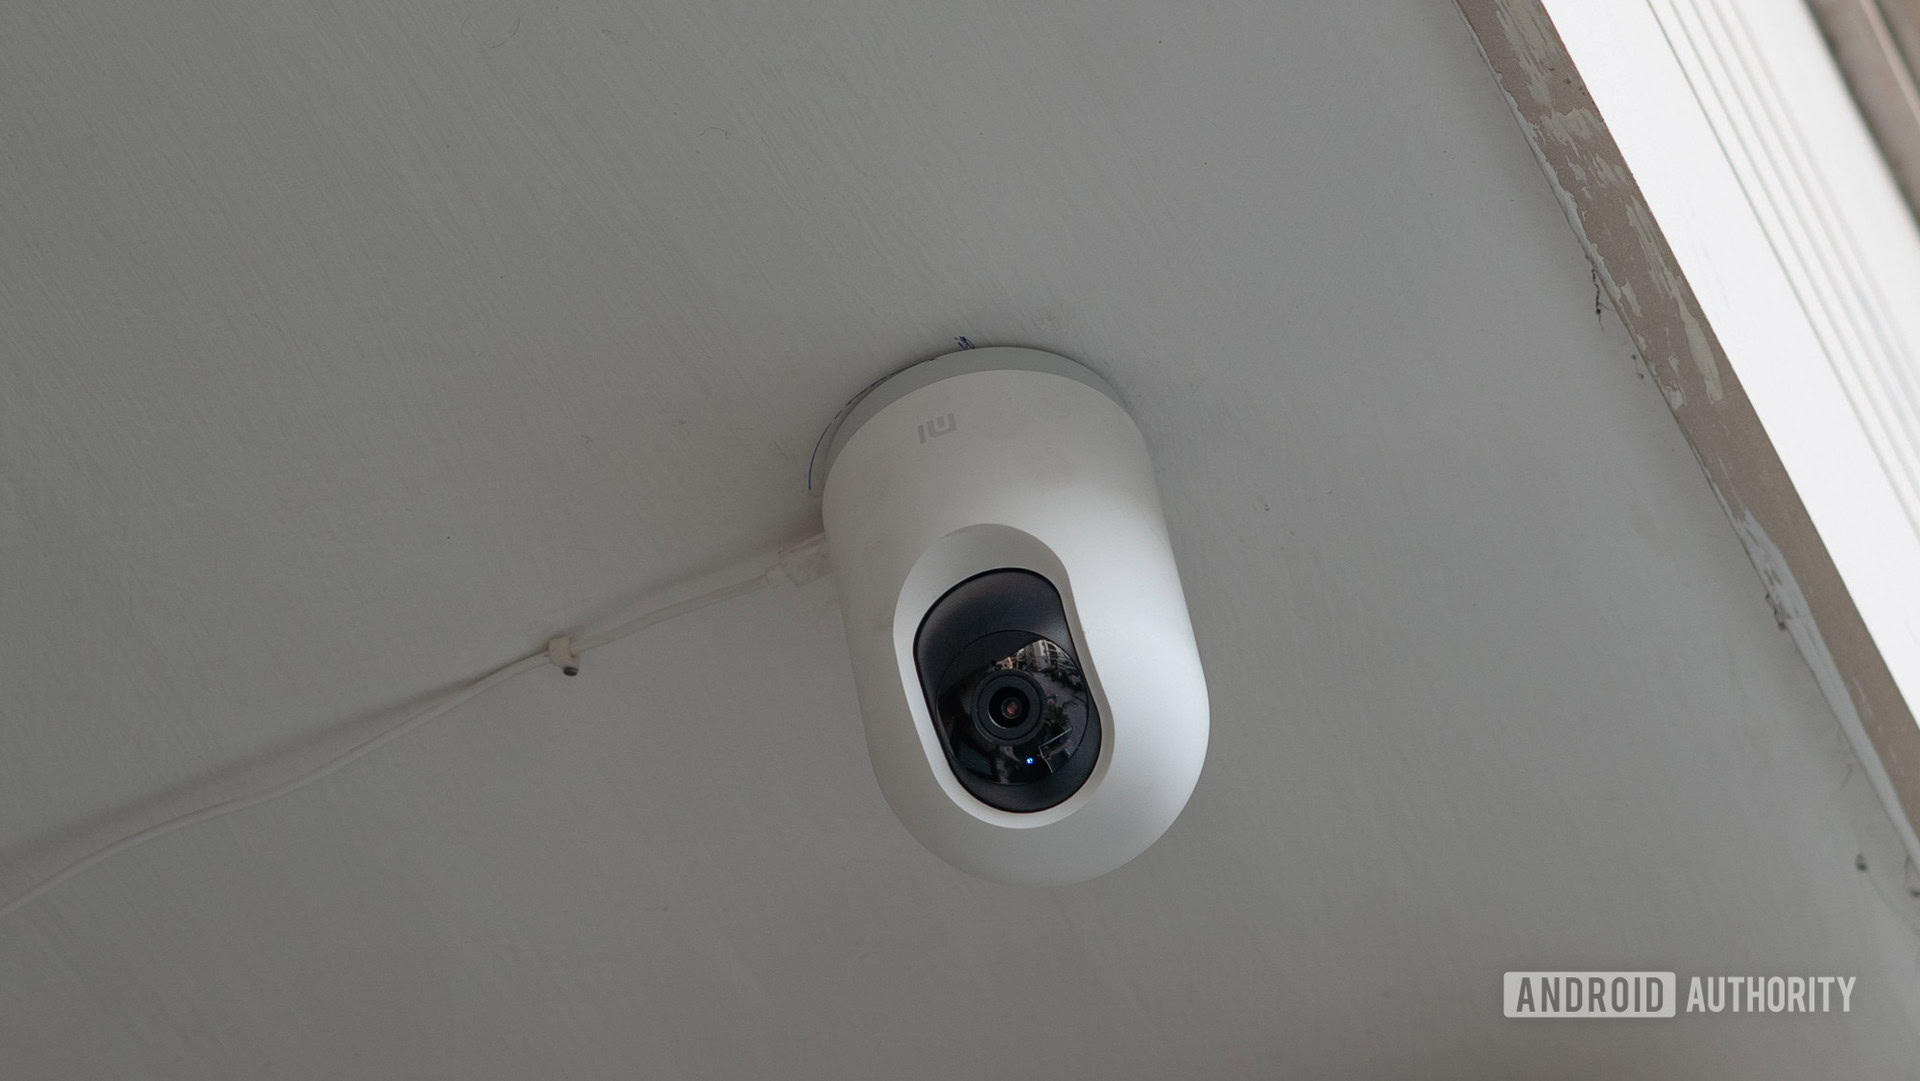  Xiaomi Mi 360 ° Home Security Camera 2K, Surveillance